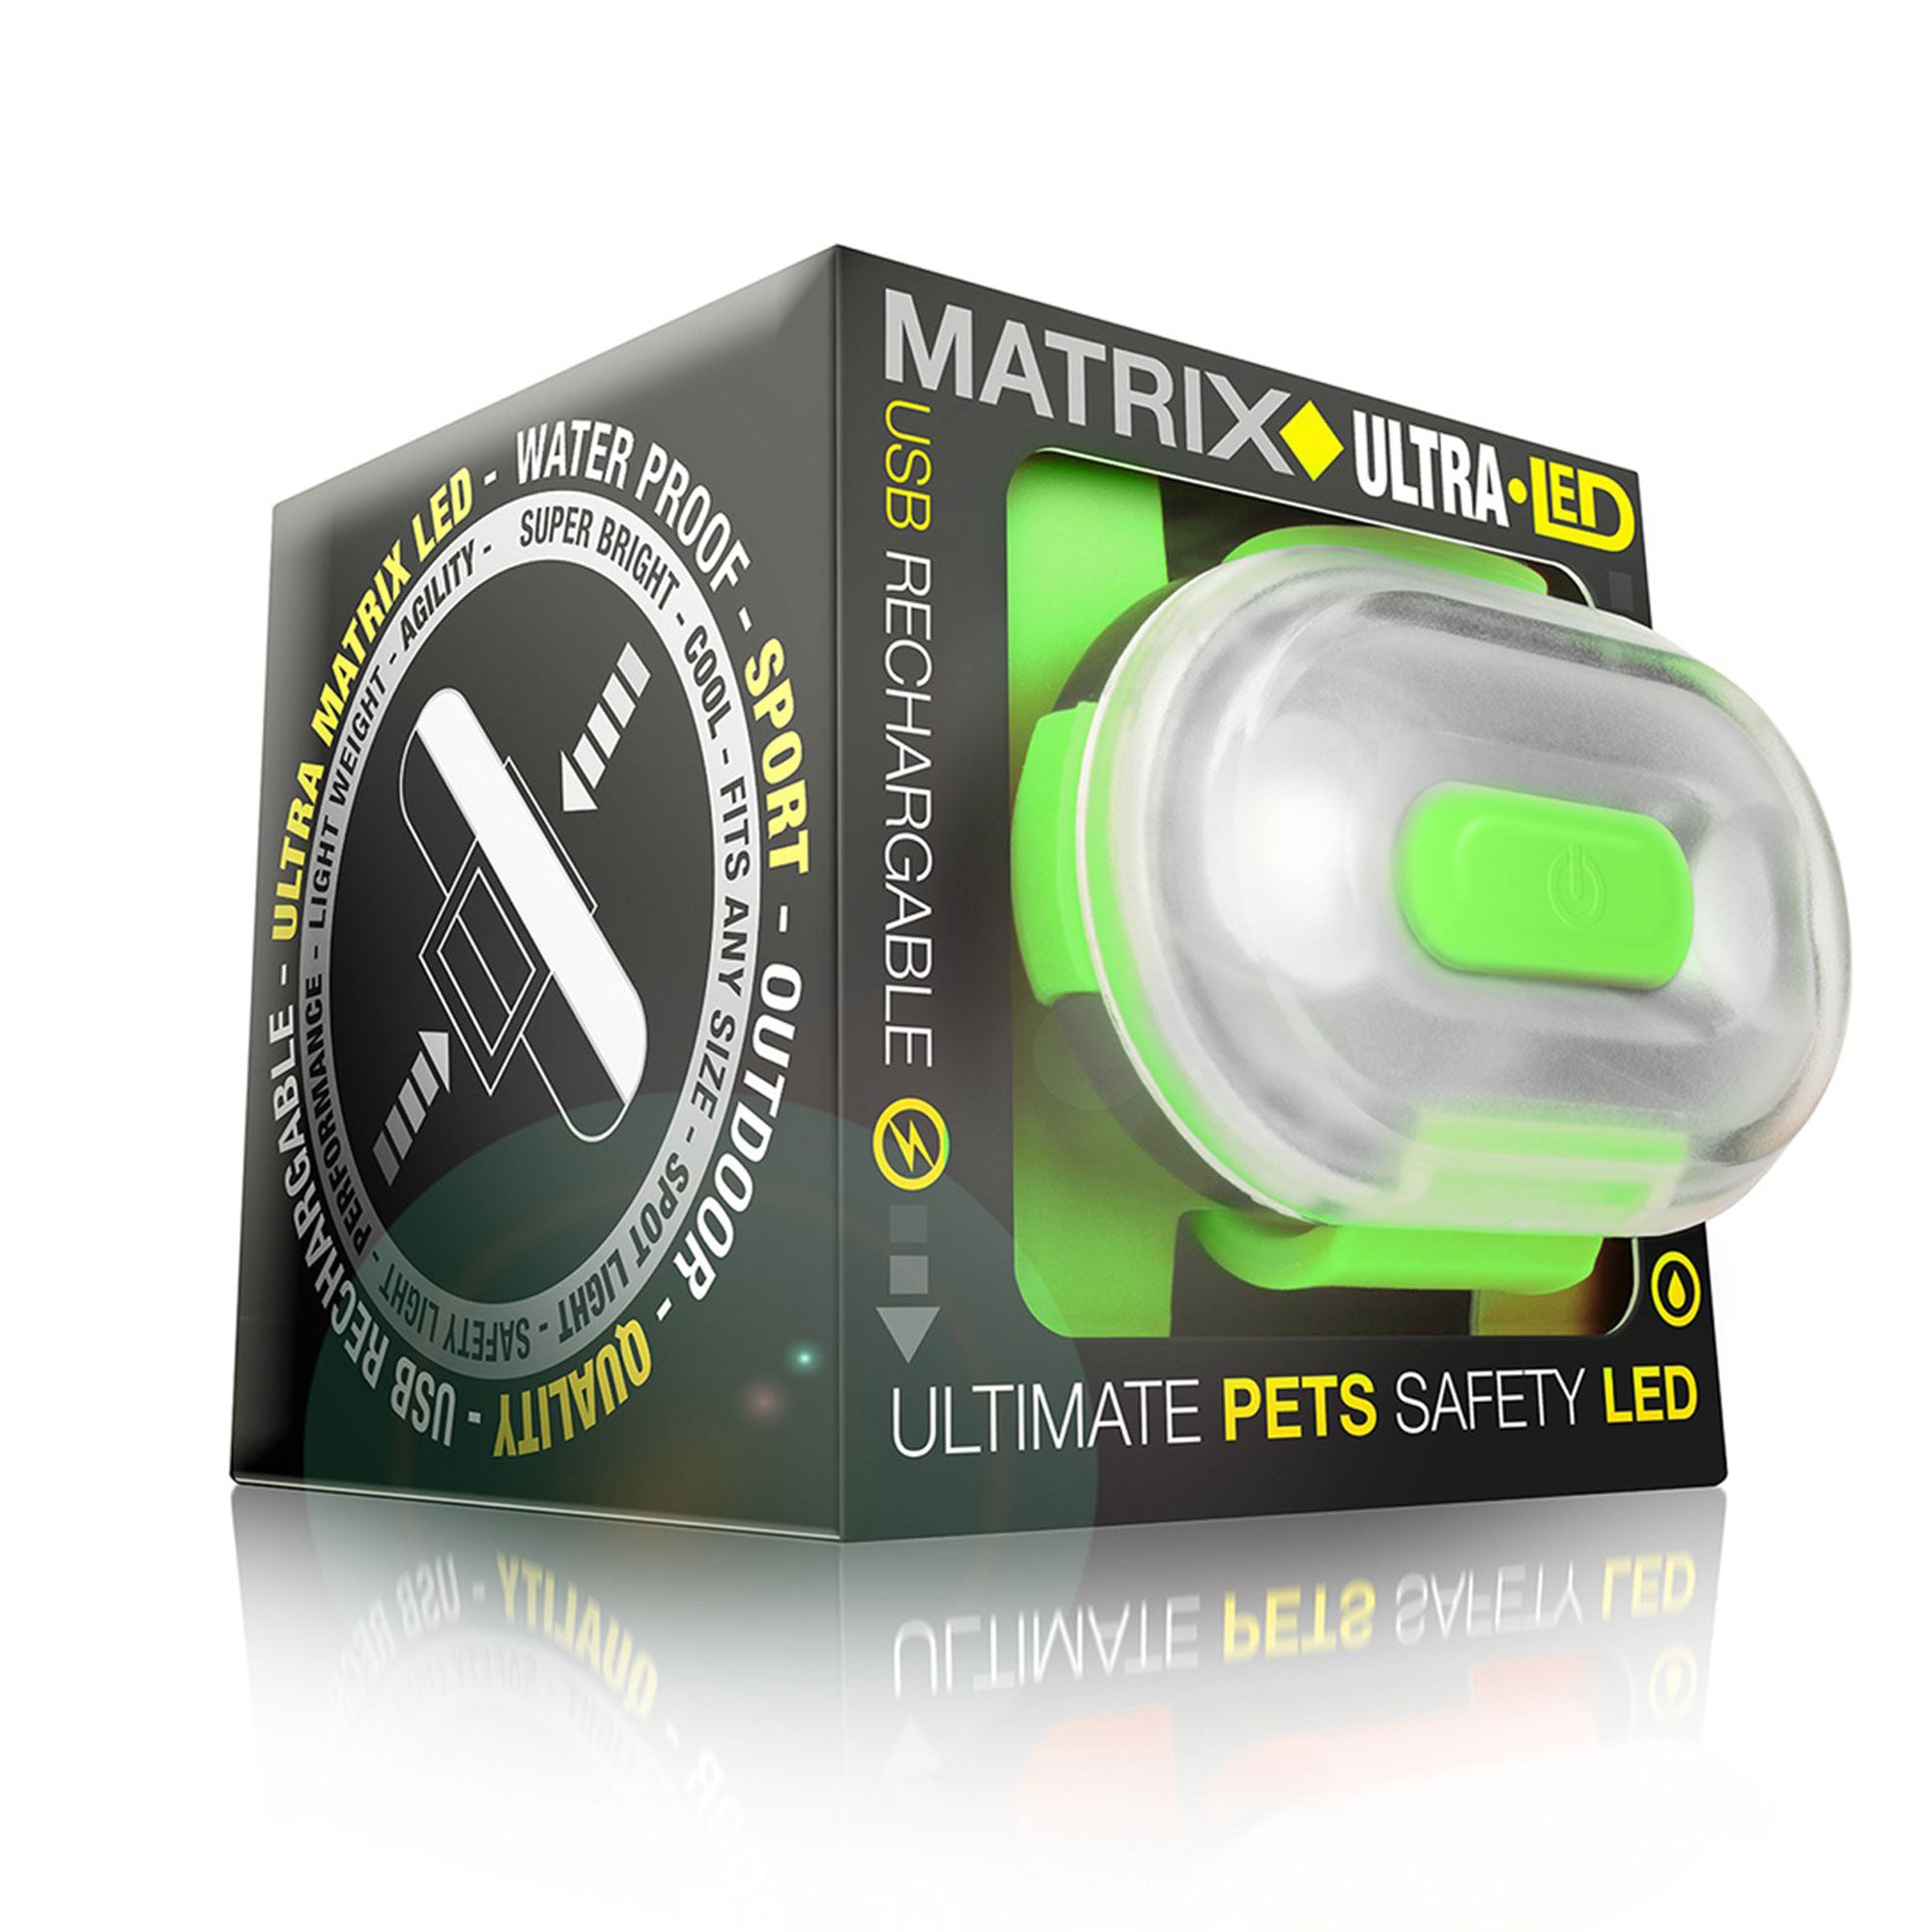 Matrix Ultra LED - Safety Lime Green